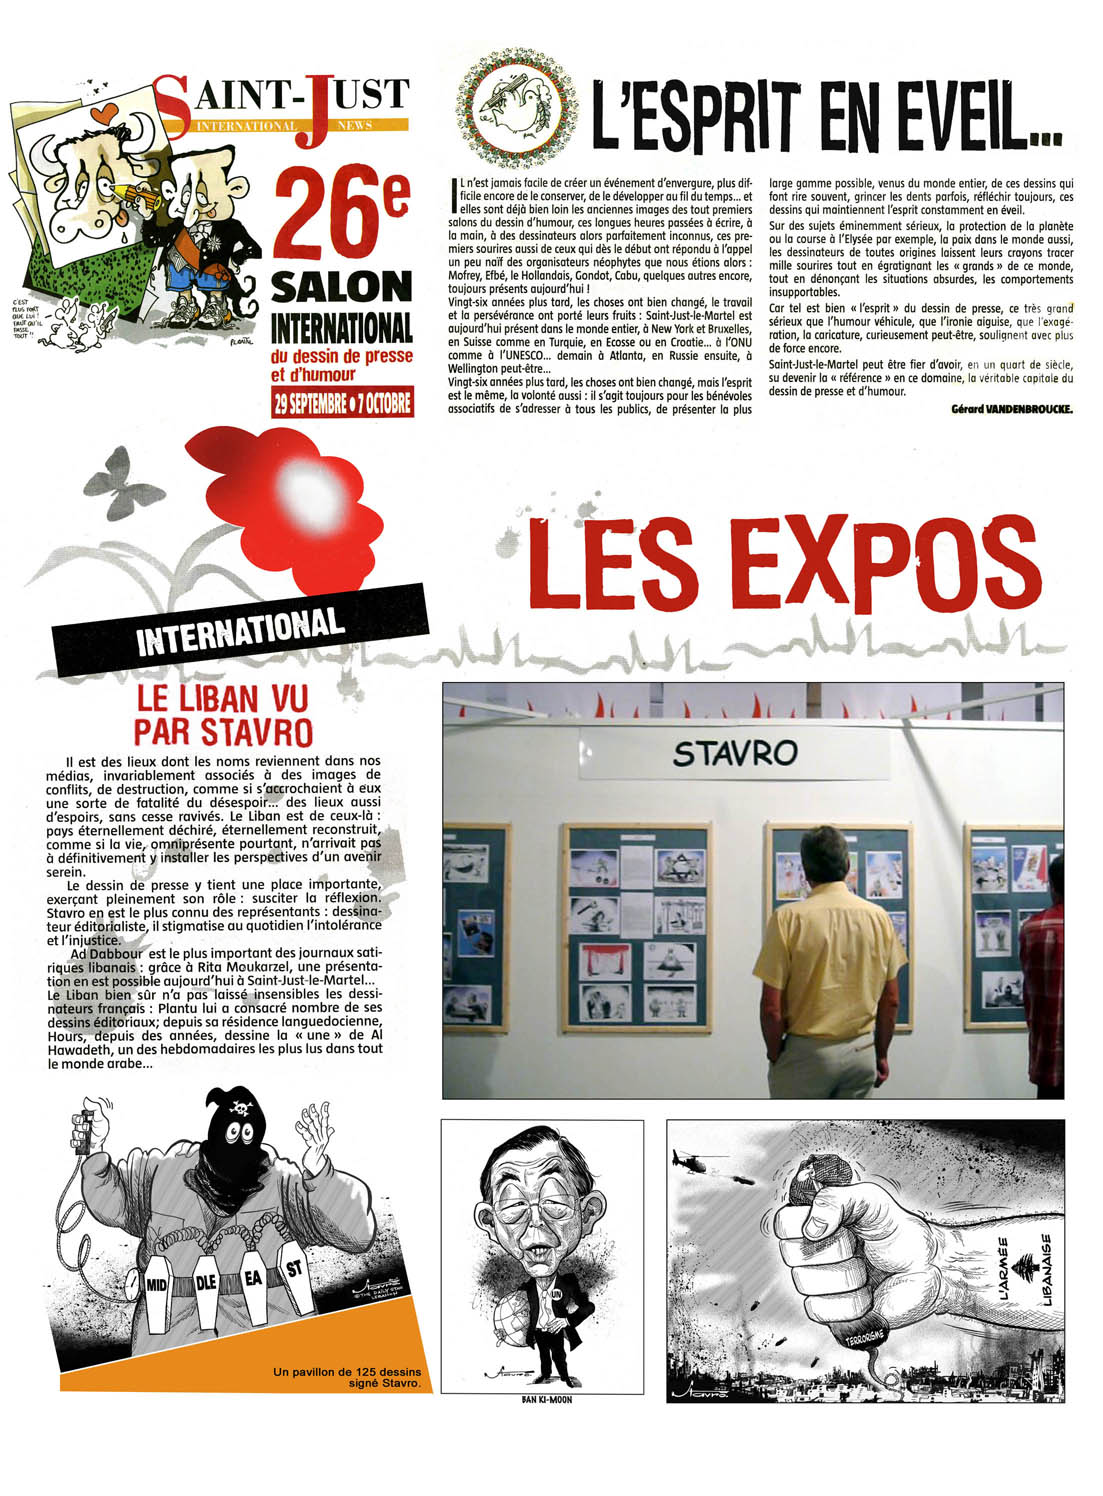 Sain Just - Le Martel, 26 Salon International de Desin de Presse et d'Humour